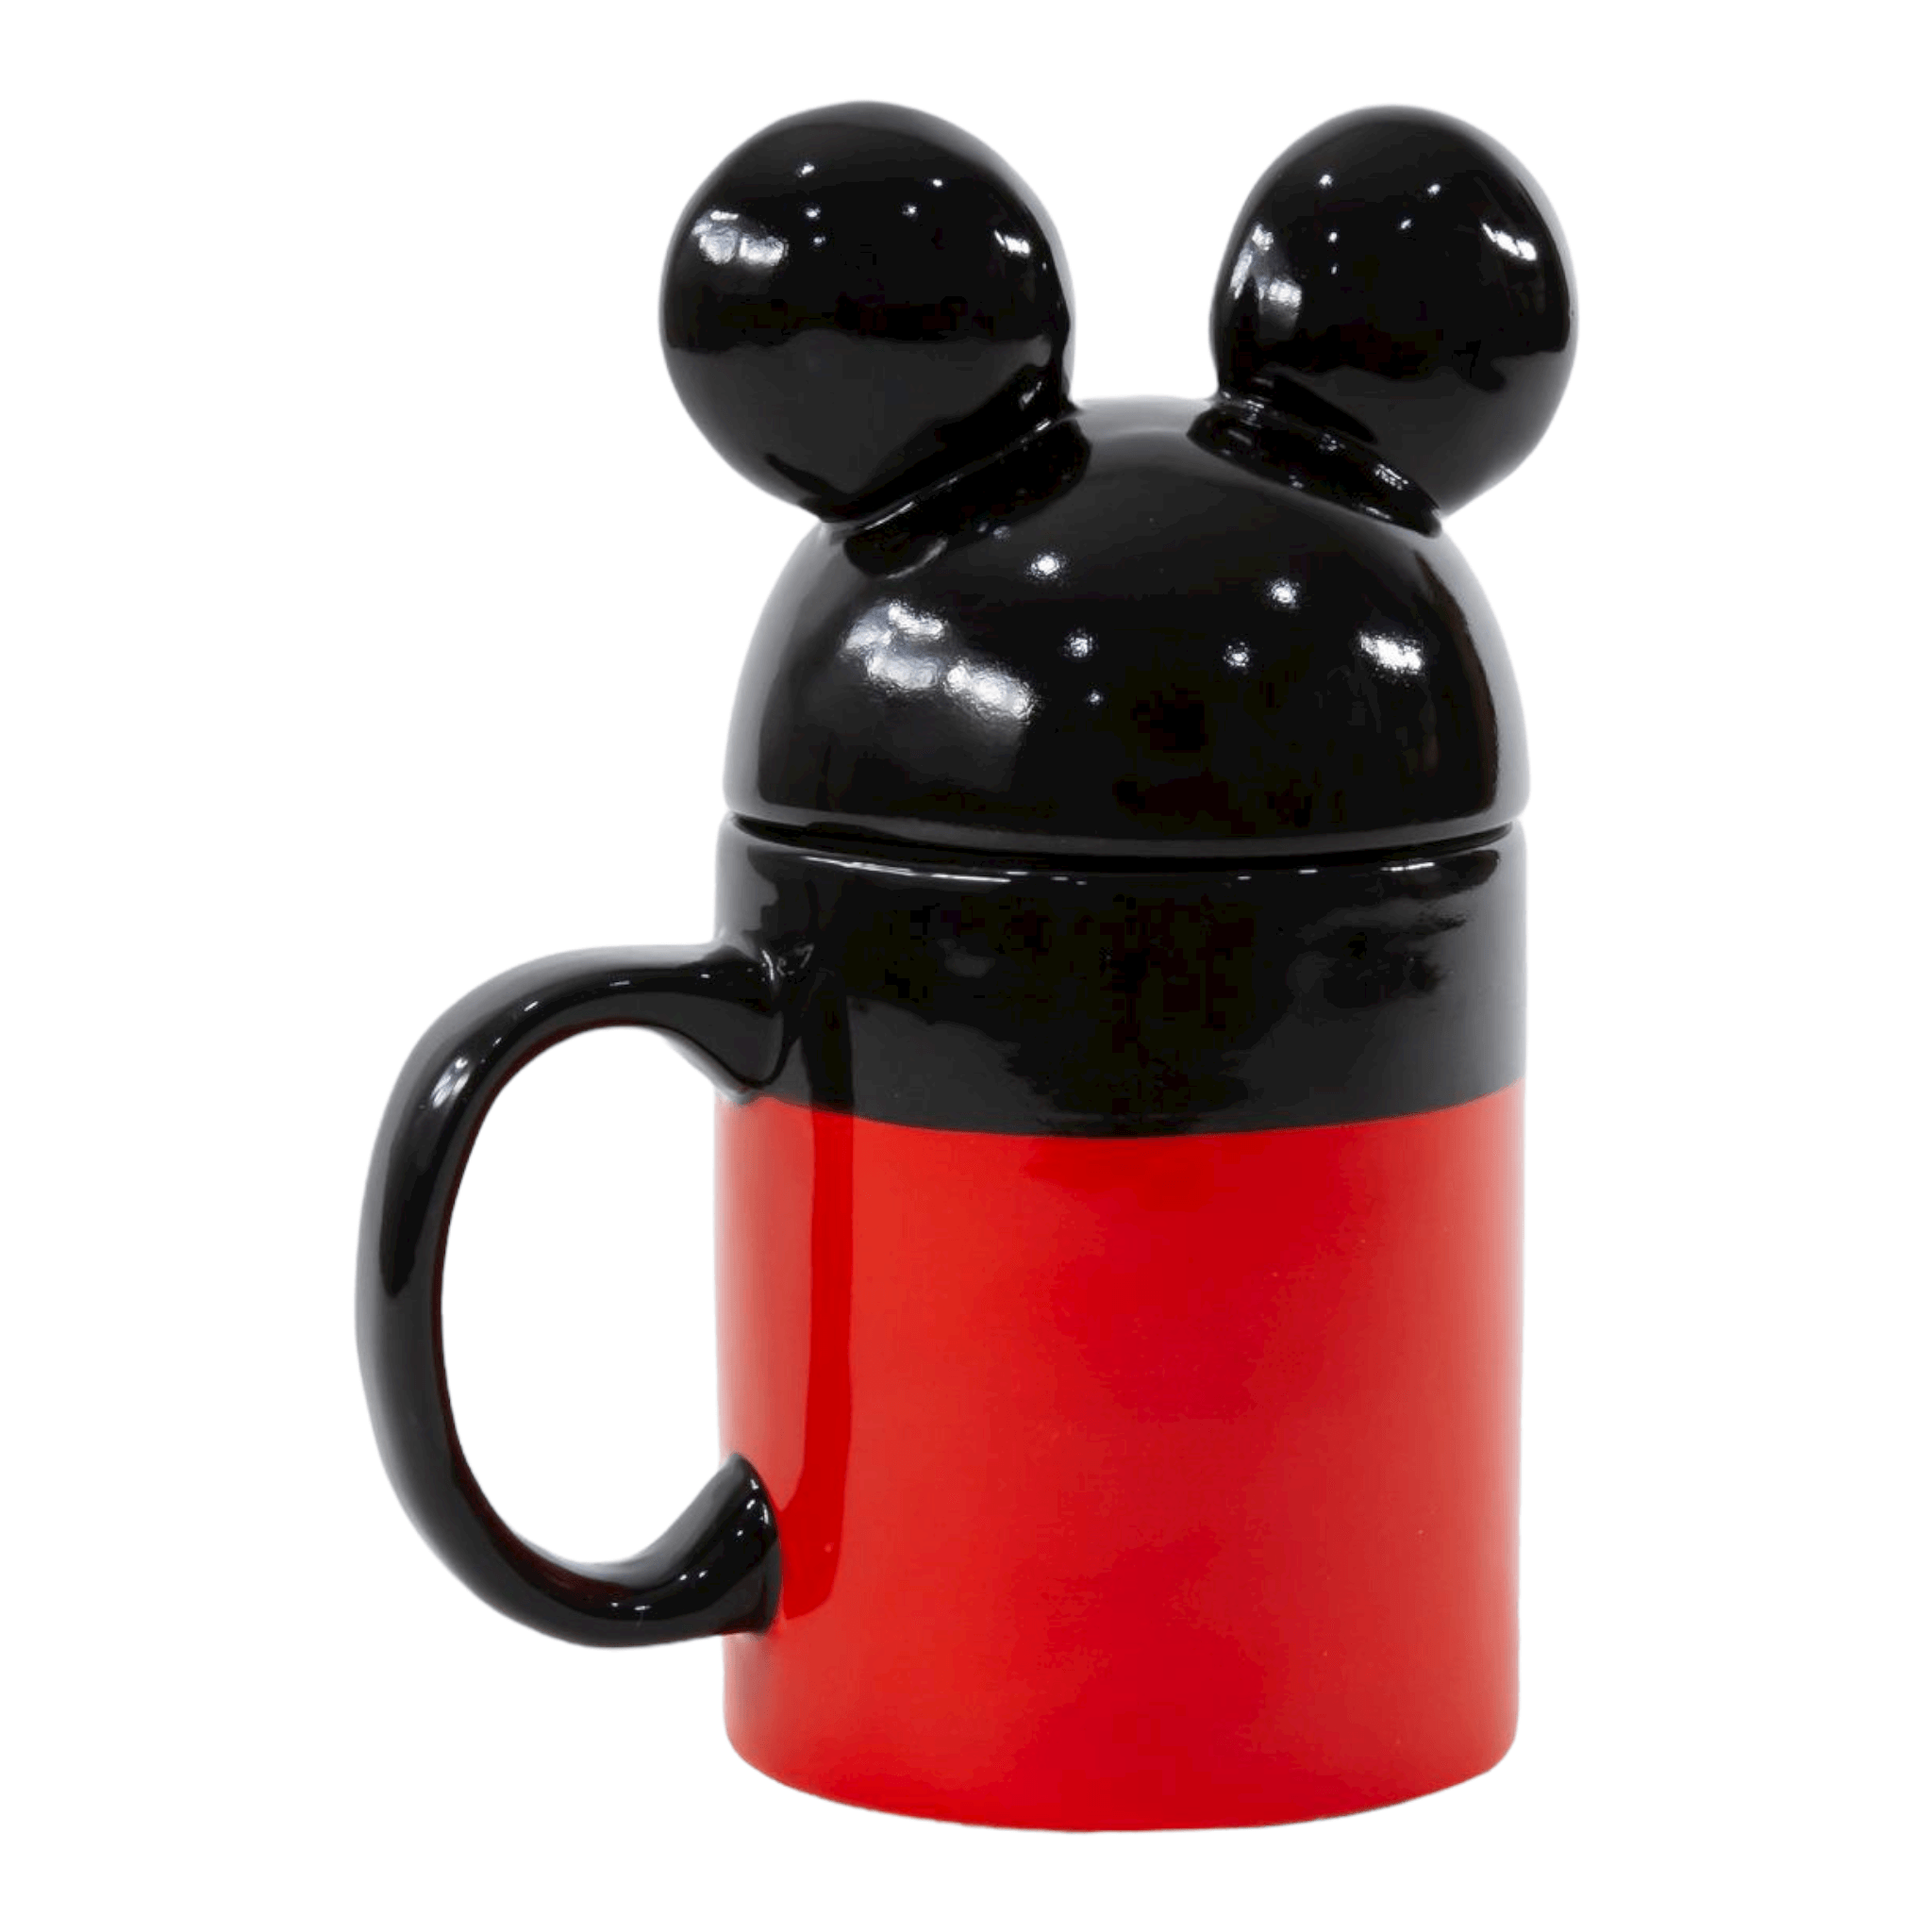 Disney Mickey Mouse Figural Mug With Lid